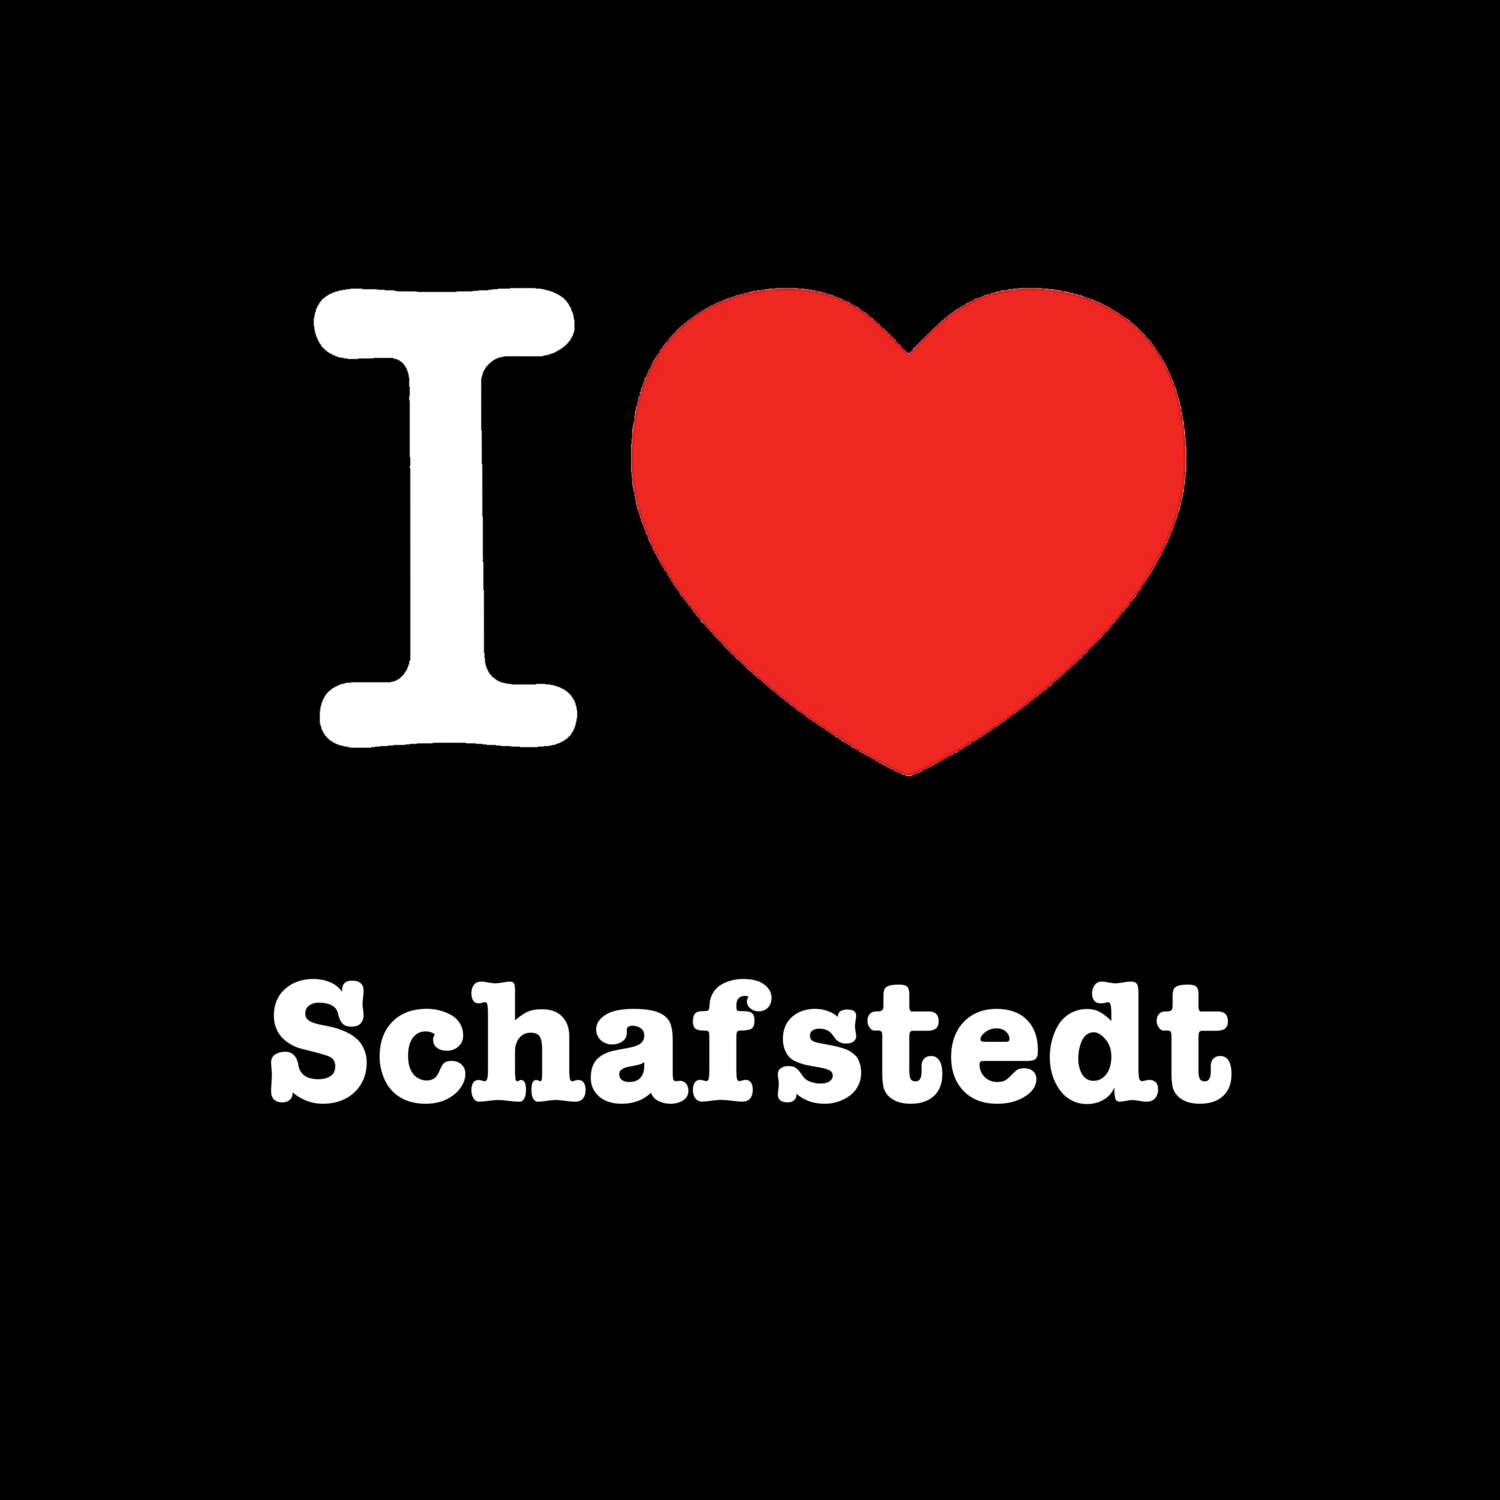 Schafstedt T-Shirt »I love«